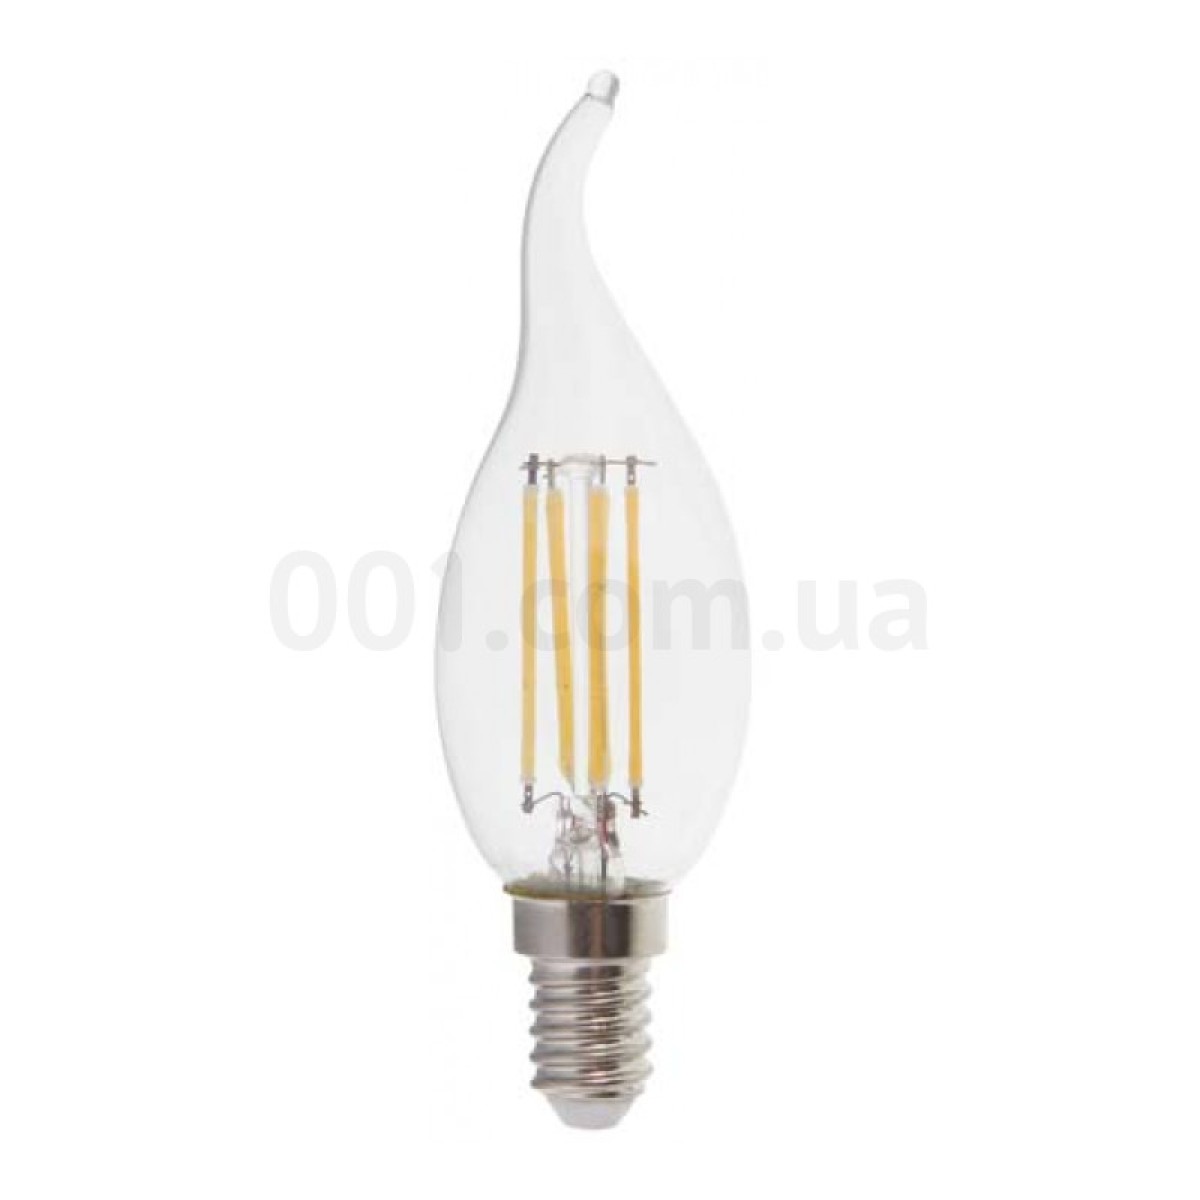 Светодиодная лампа LB-159 CF37 (свеча на ветру) филамент 6Вт 2700K E14, Feron 98_98.jpg